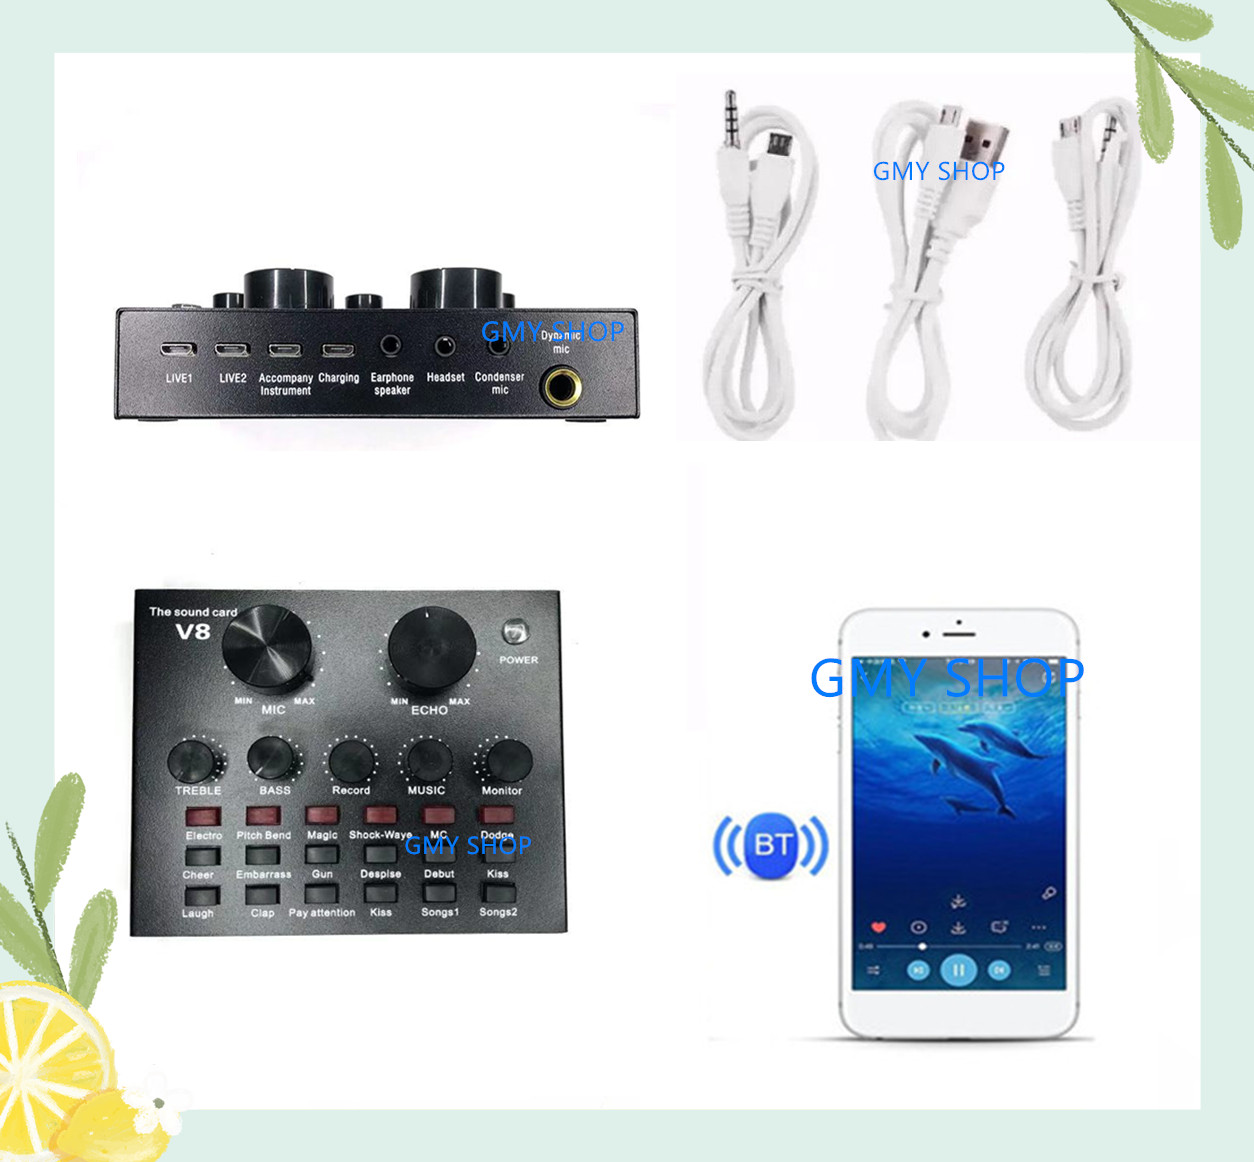 V8 V8S+ Audio Live Sound Card for Phone Computer USB Headset Microphone Webcast-(Bluetooth)